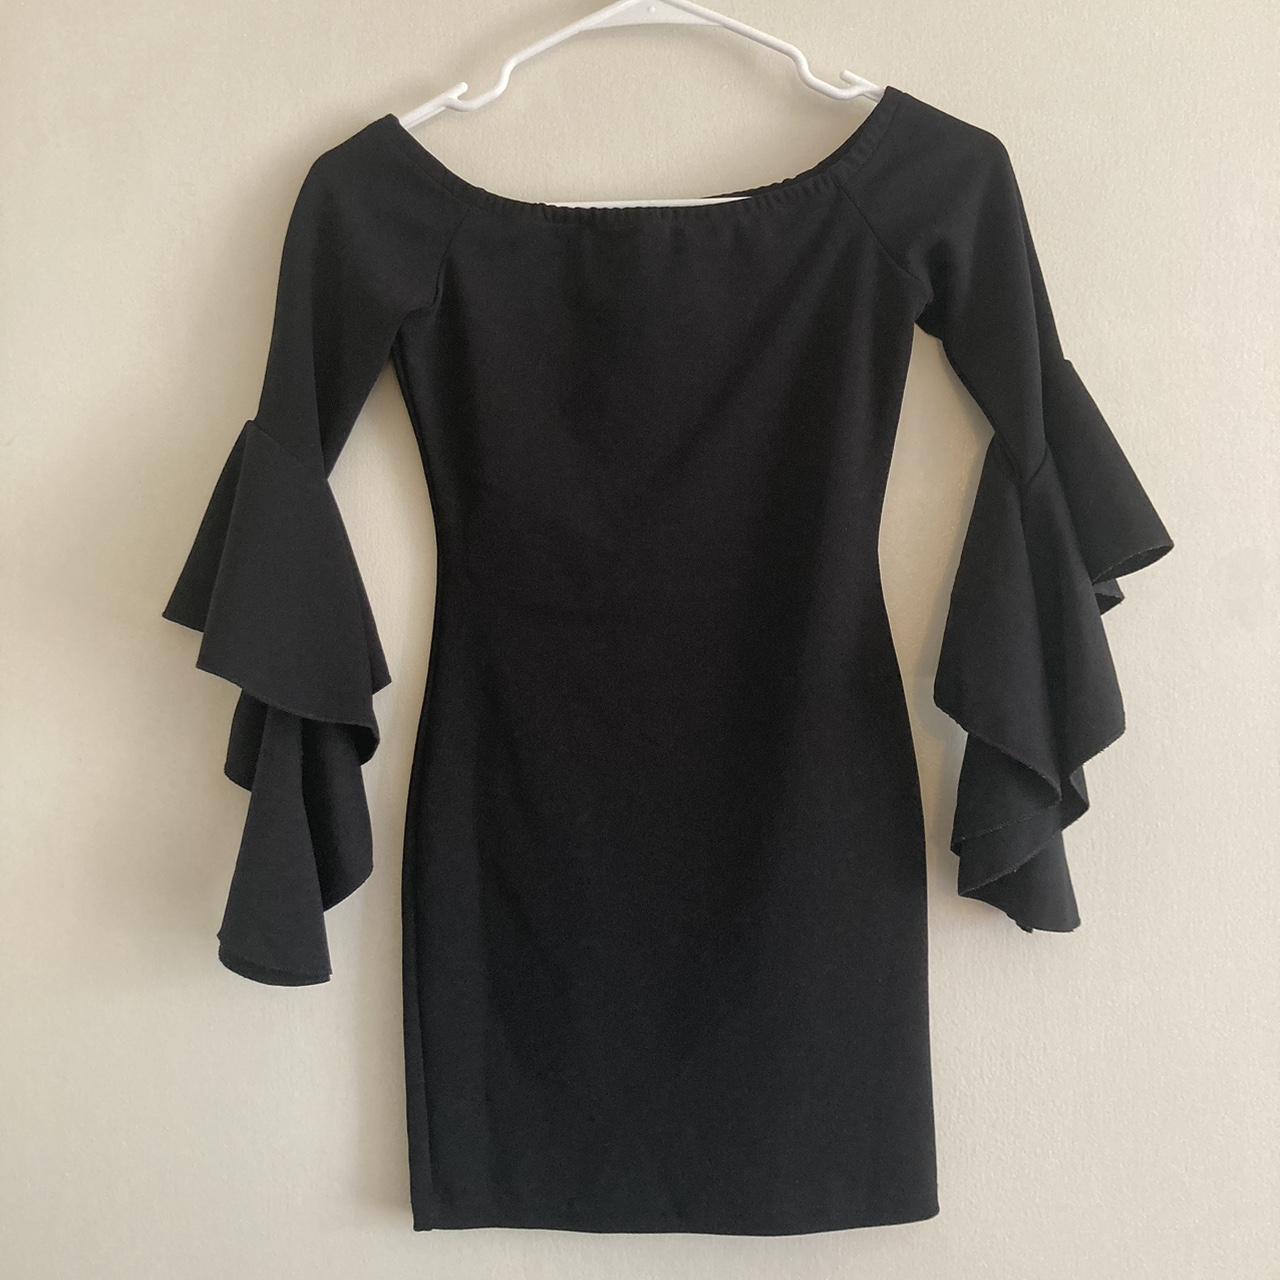 Missguided Women's Black Dress